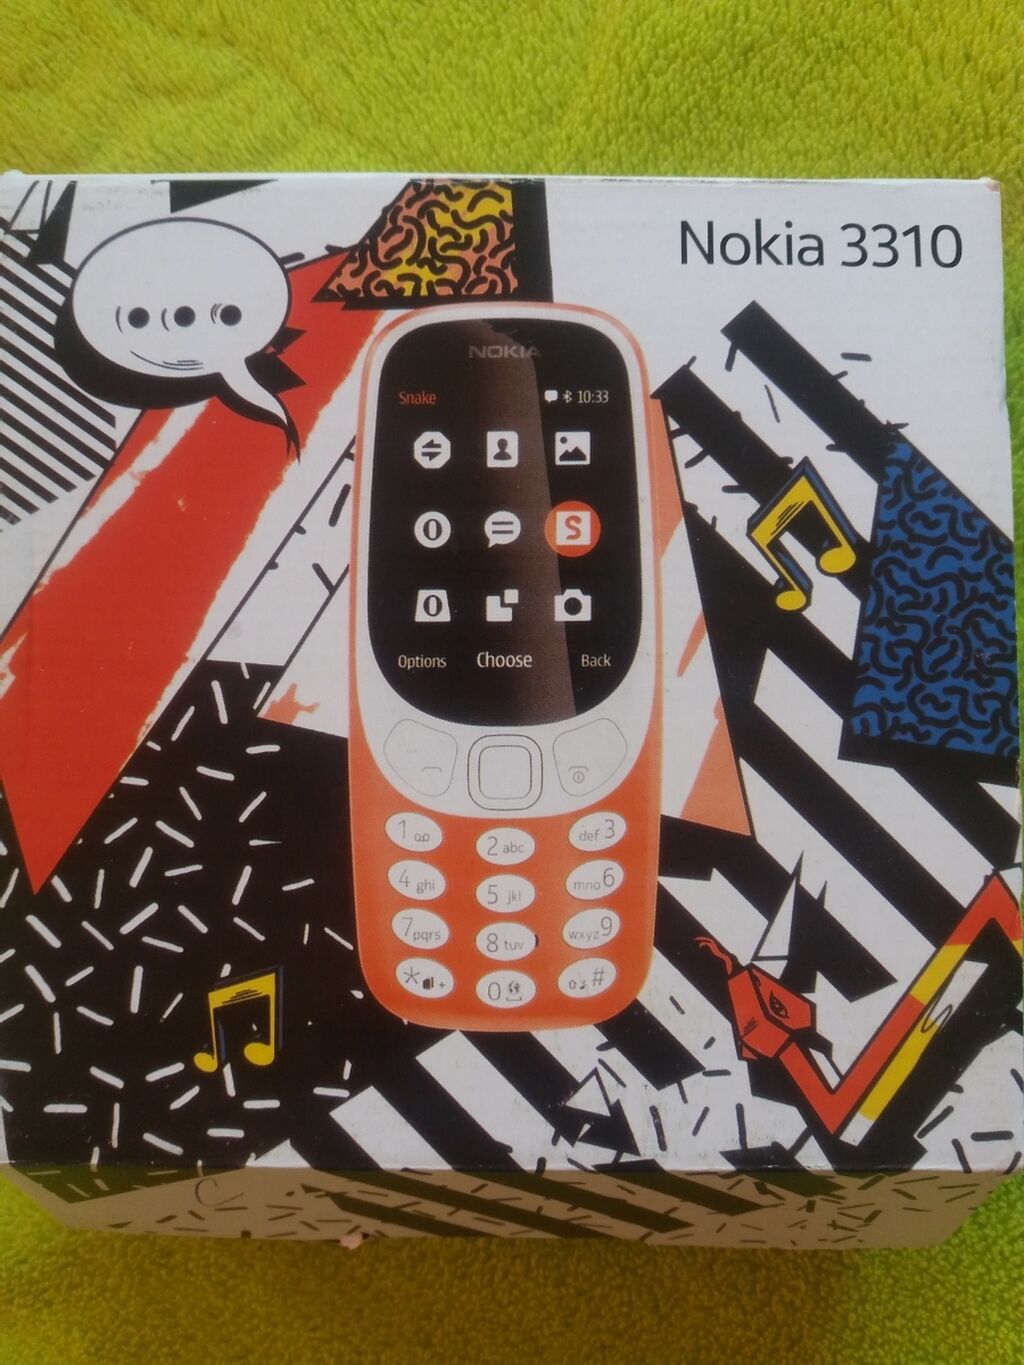 Nokia 3310 novo

Sim free
1999din. 1999 RSD | Oglas postavljen 30 Mart 2022 15:07:33: Nokia bоја - Crna Novo | Dual SIM cards